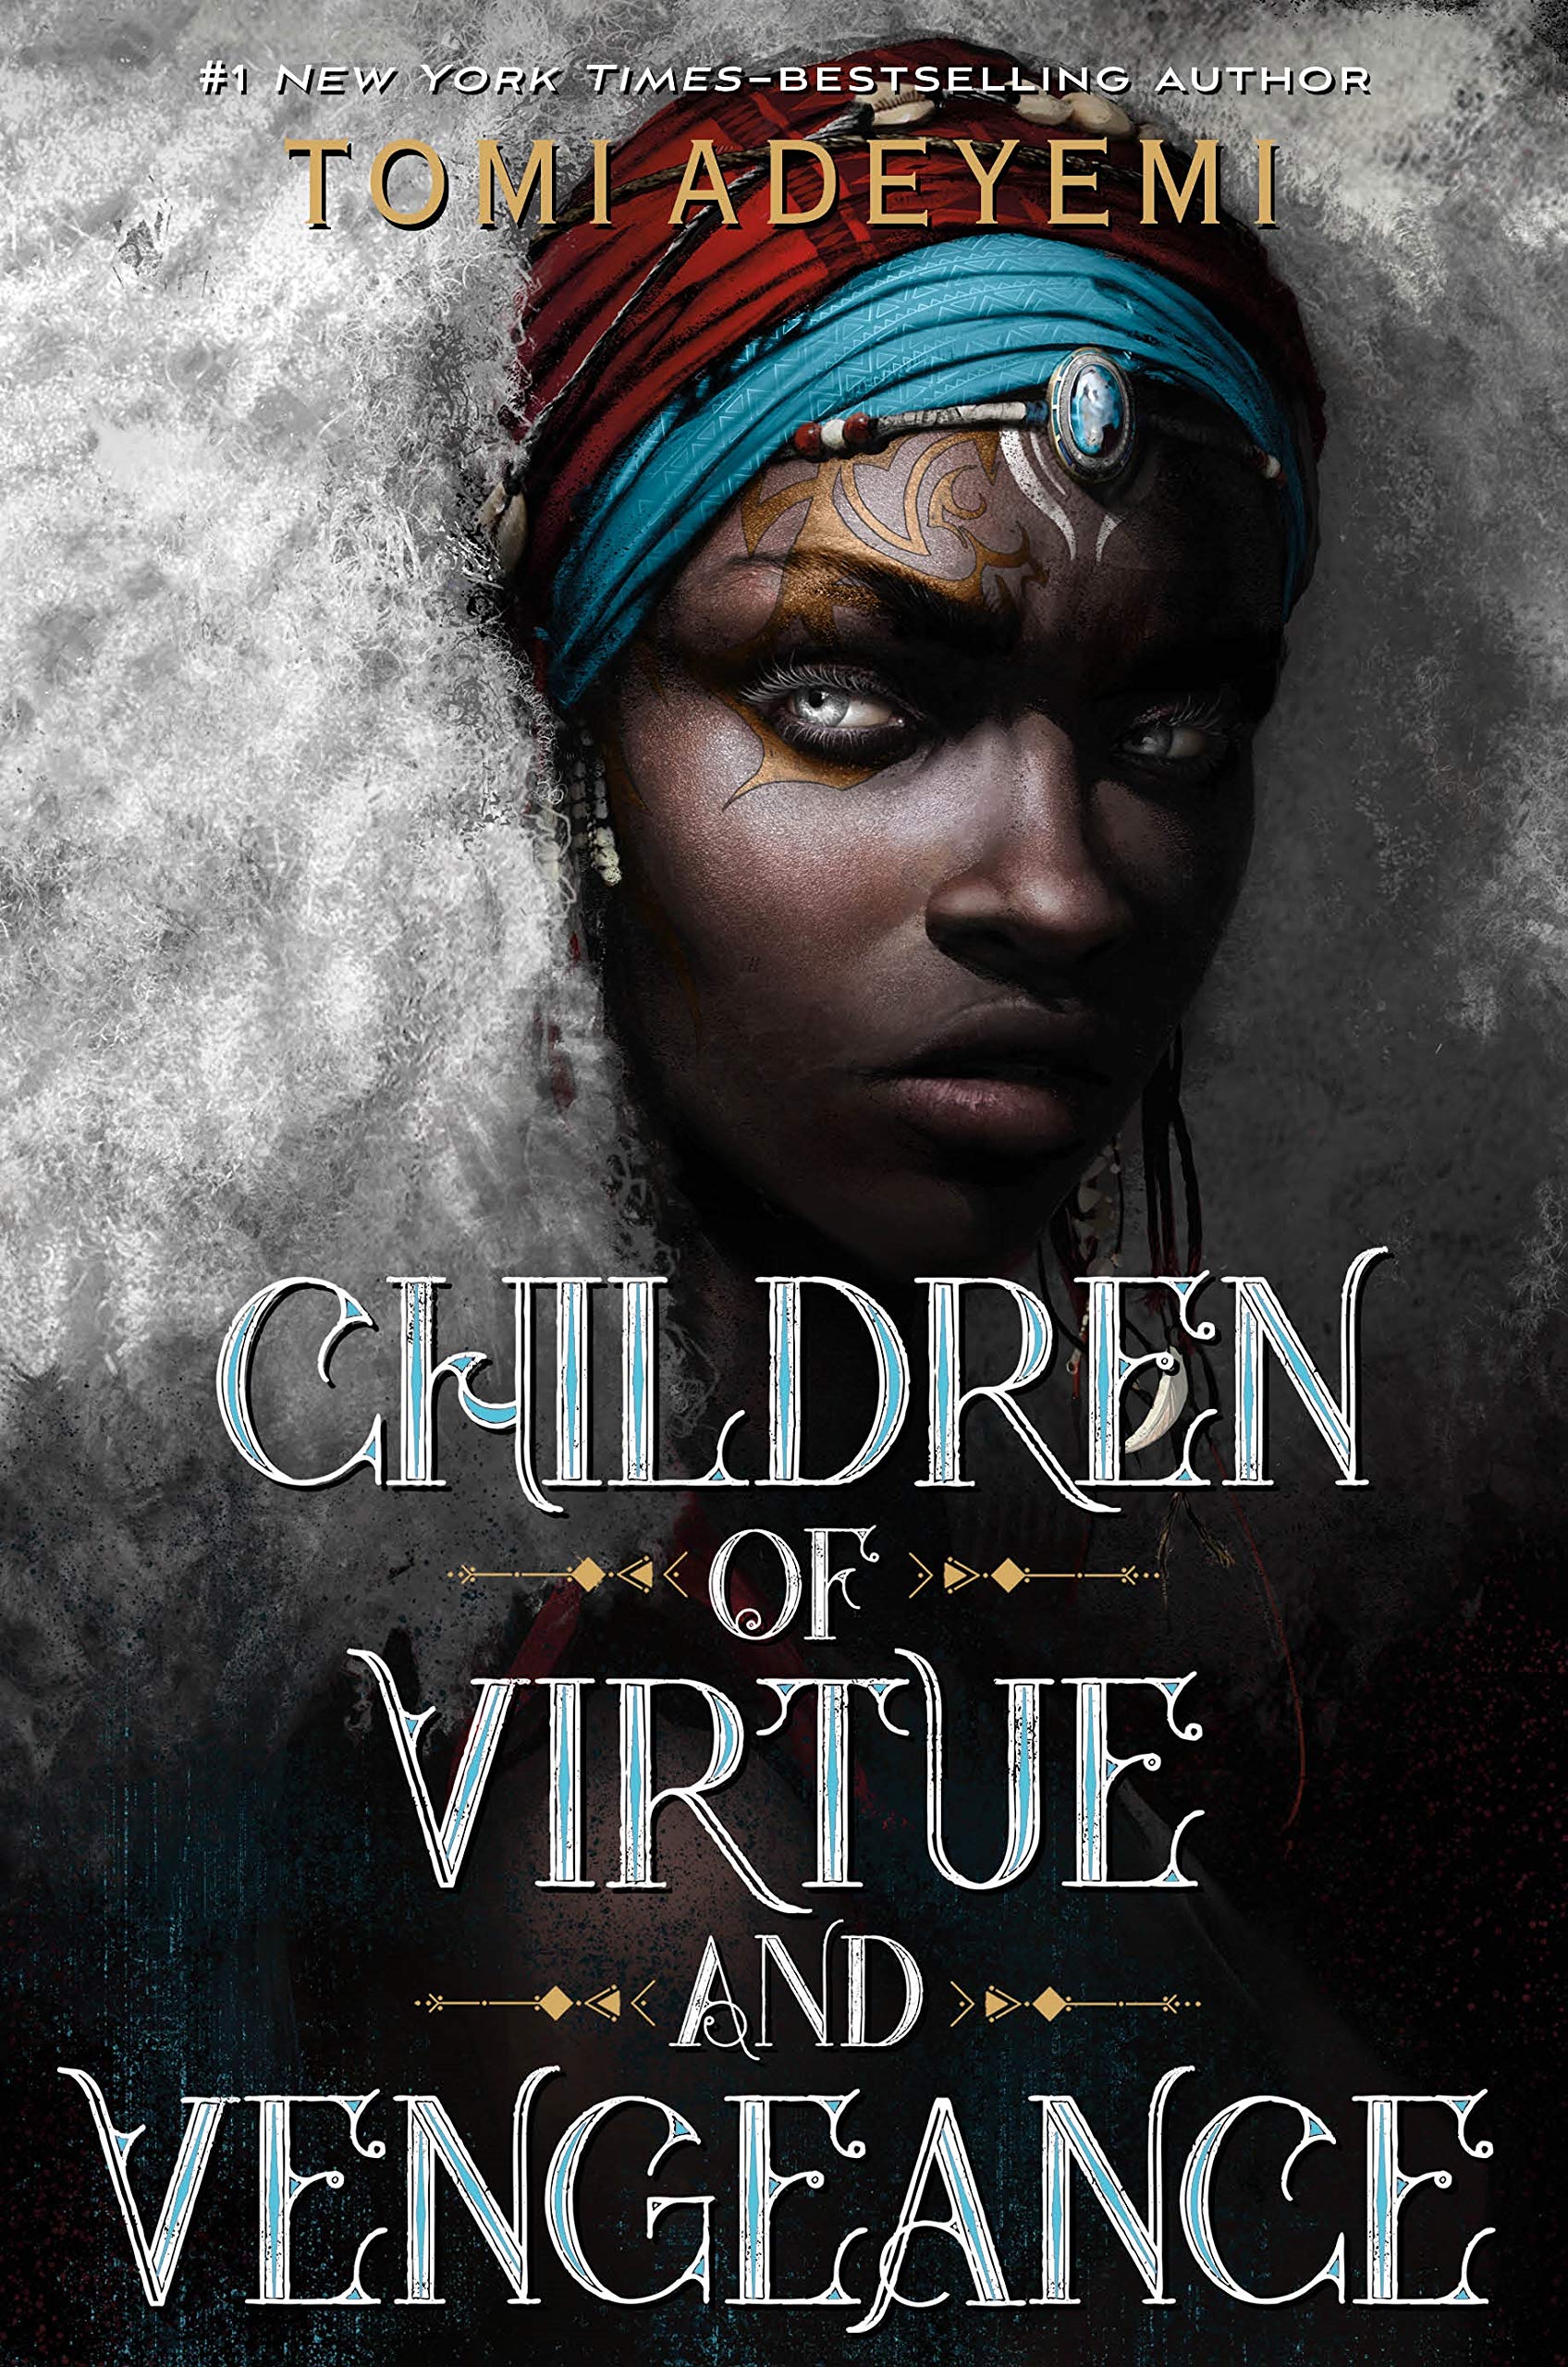 Image for "Children of Virtue and Vengeance"